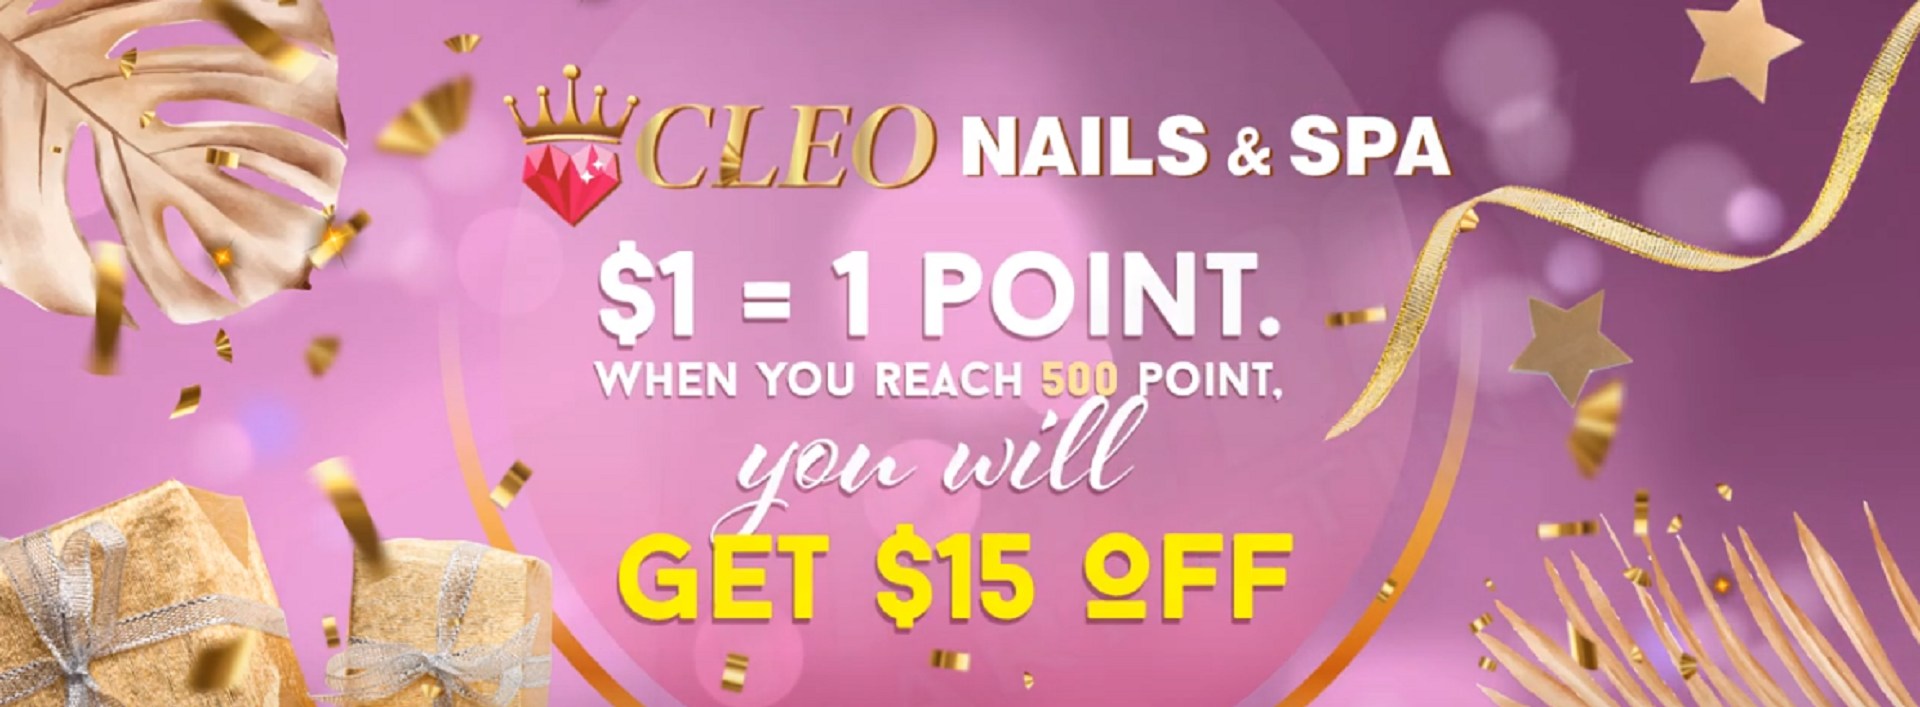 Cleo Nails & Spa - The best nail salon near me North York Toronto ON M9M 2S1